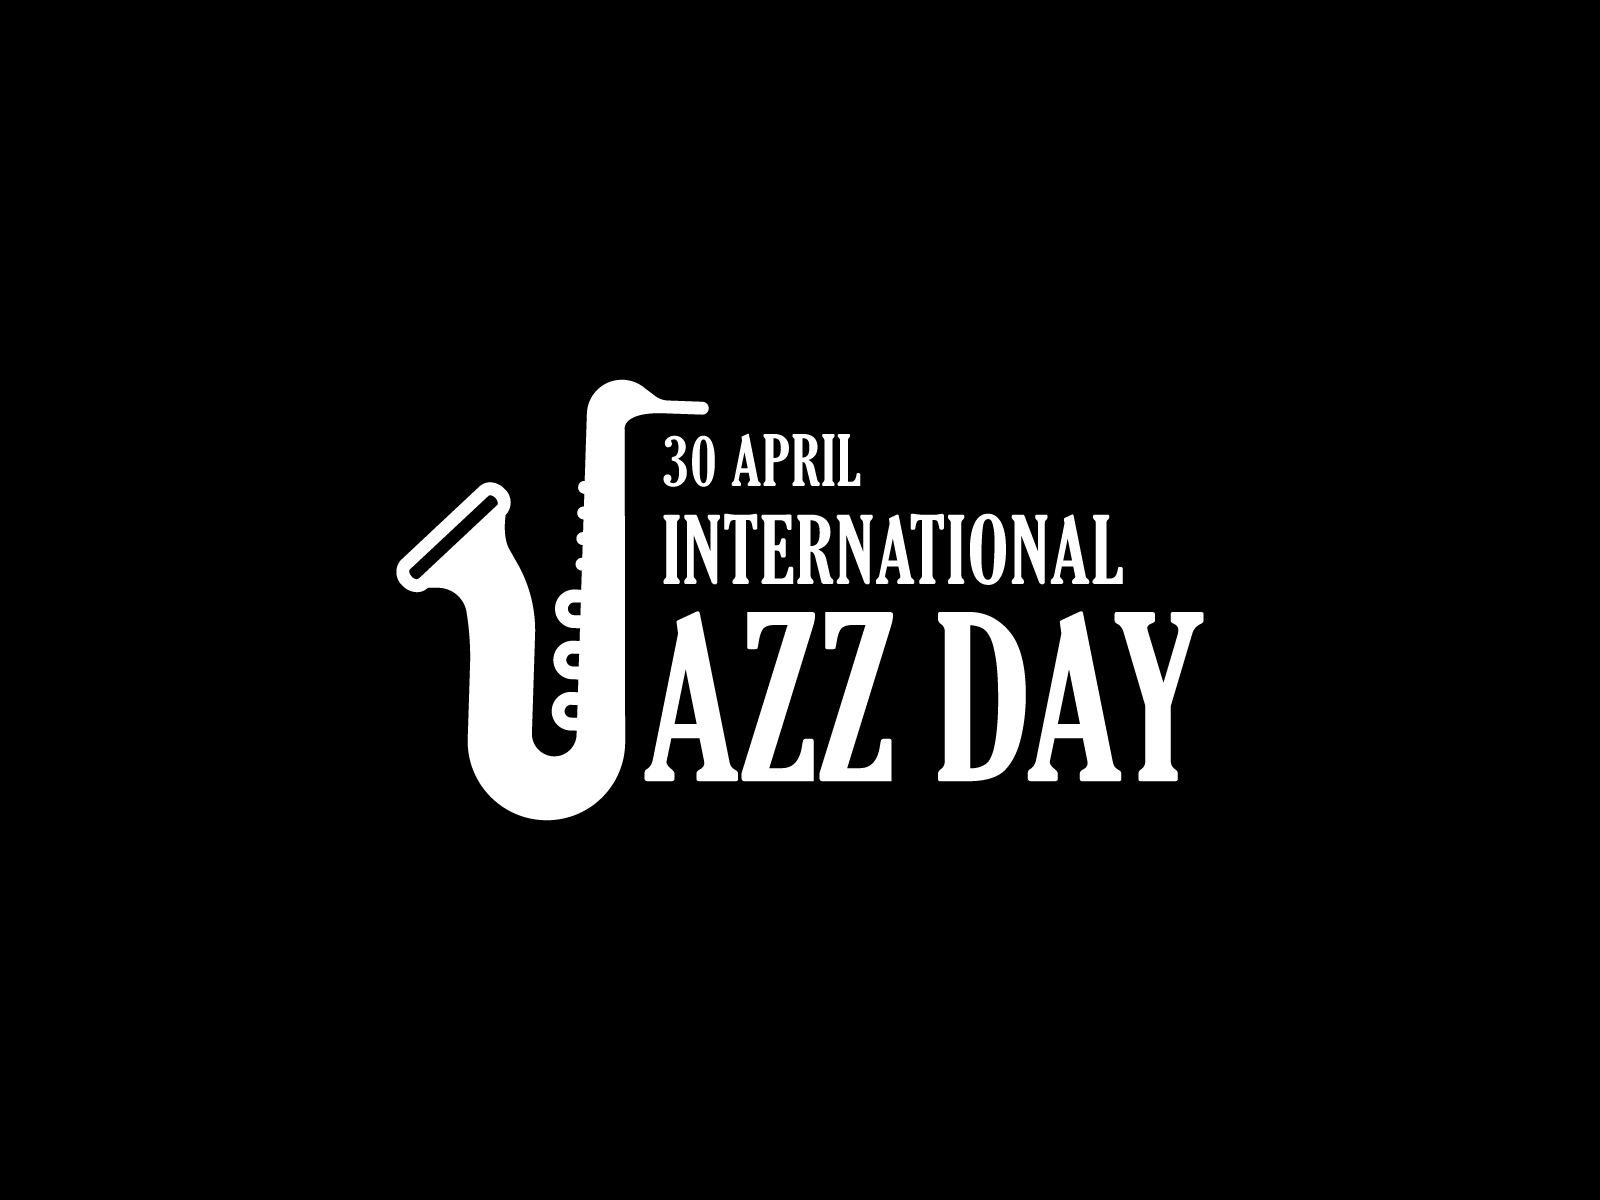 international jazz day second concept by Rahal Nejraoui on Dribbble